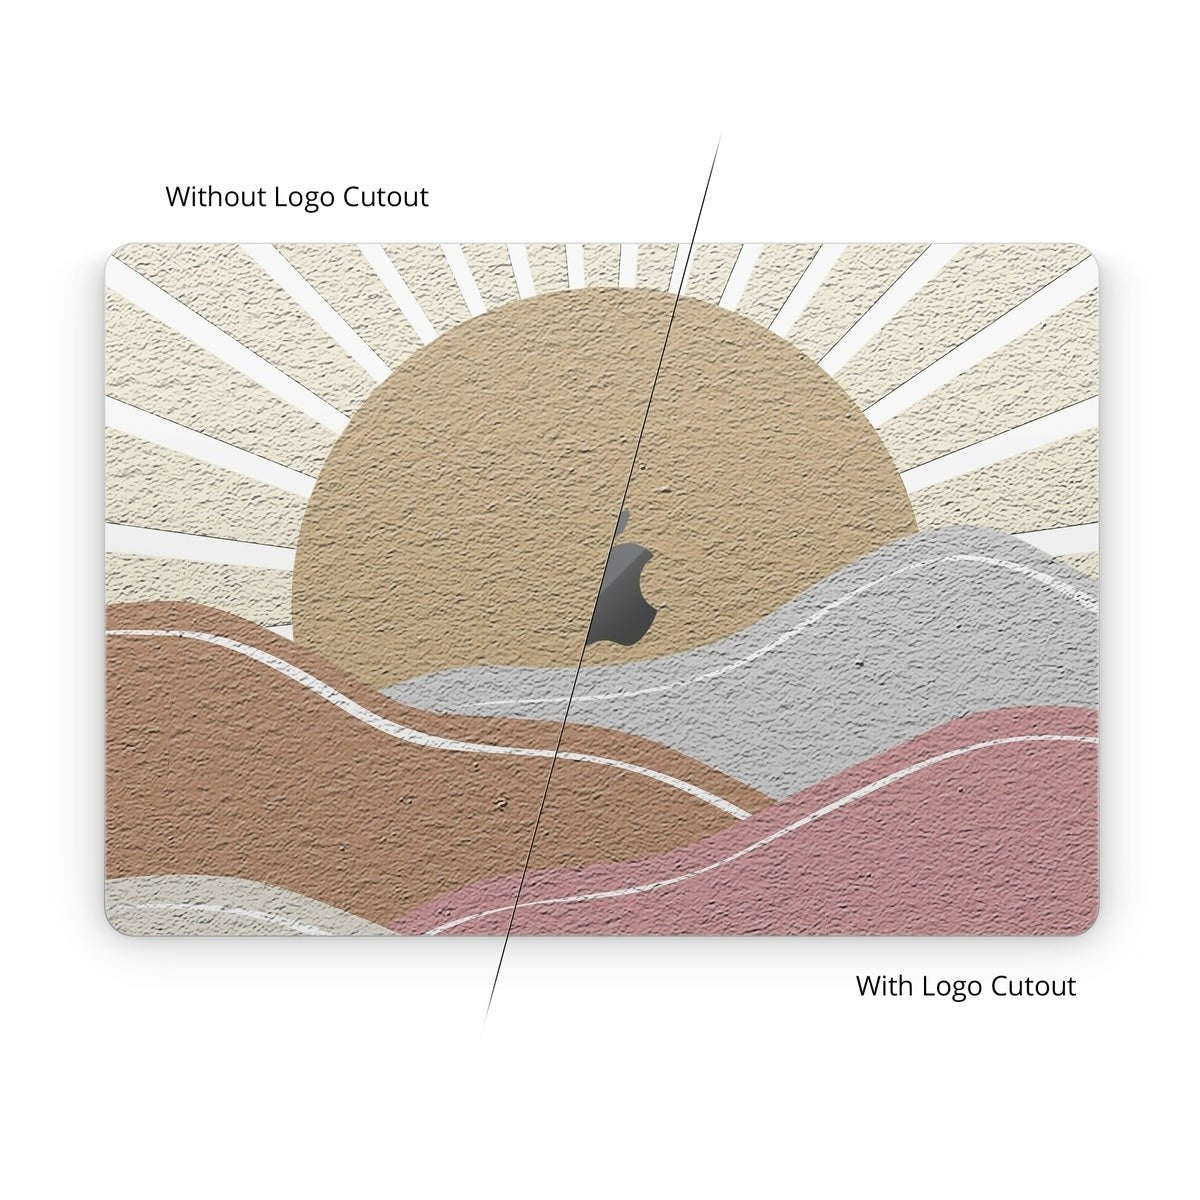 Sunset - Apple MacBook Skin - Martina - DecalGirl